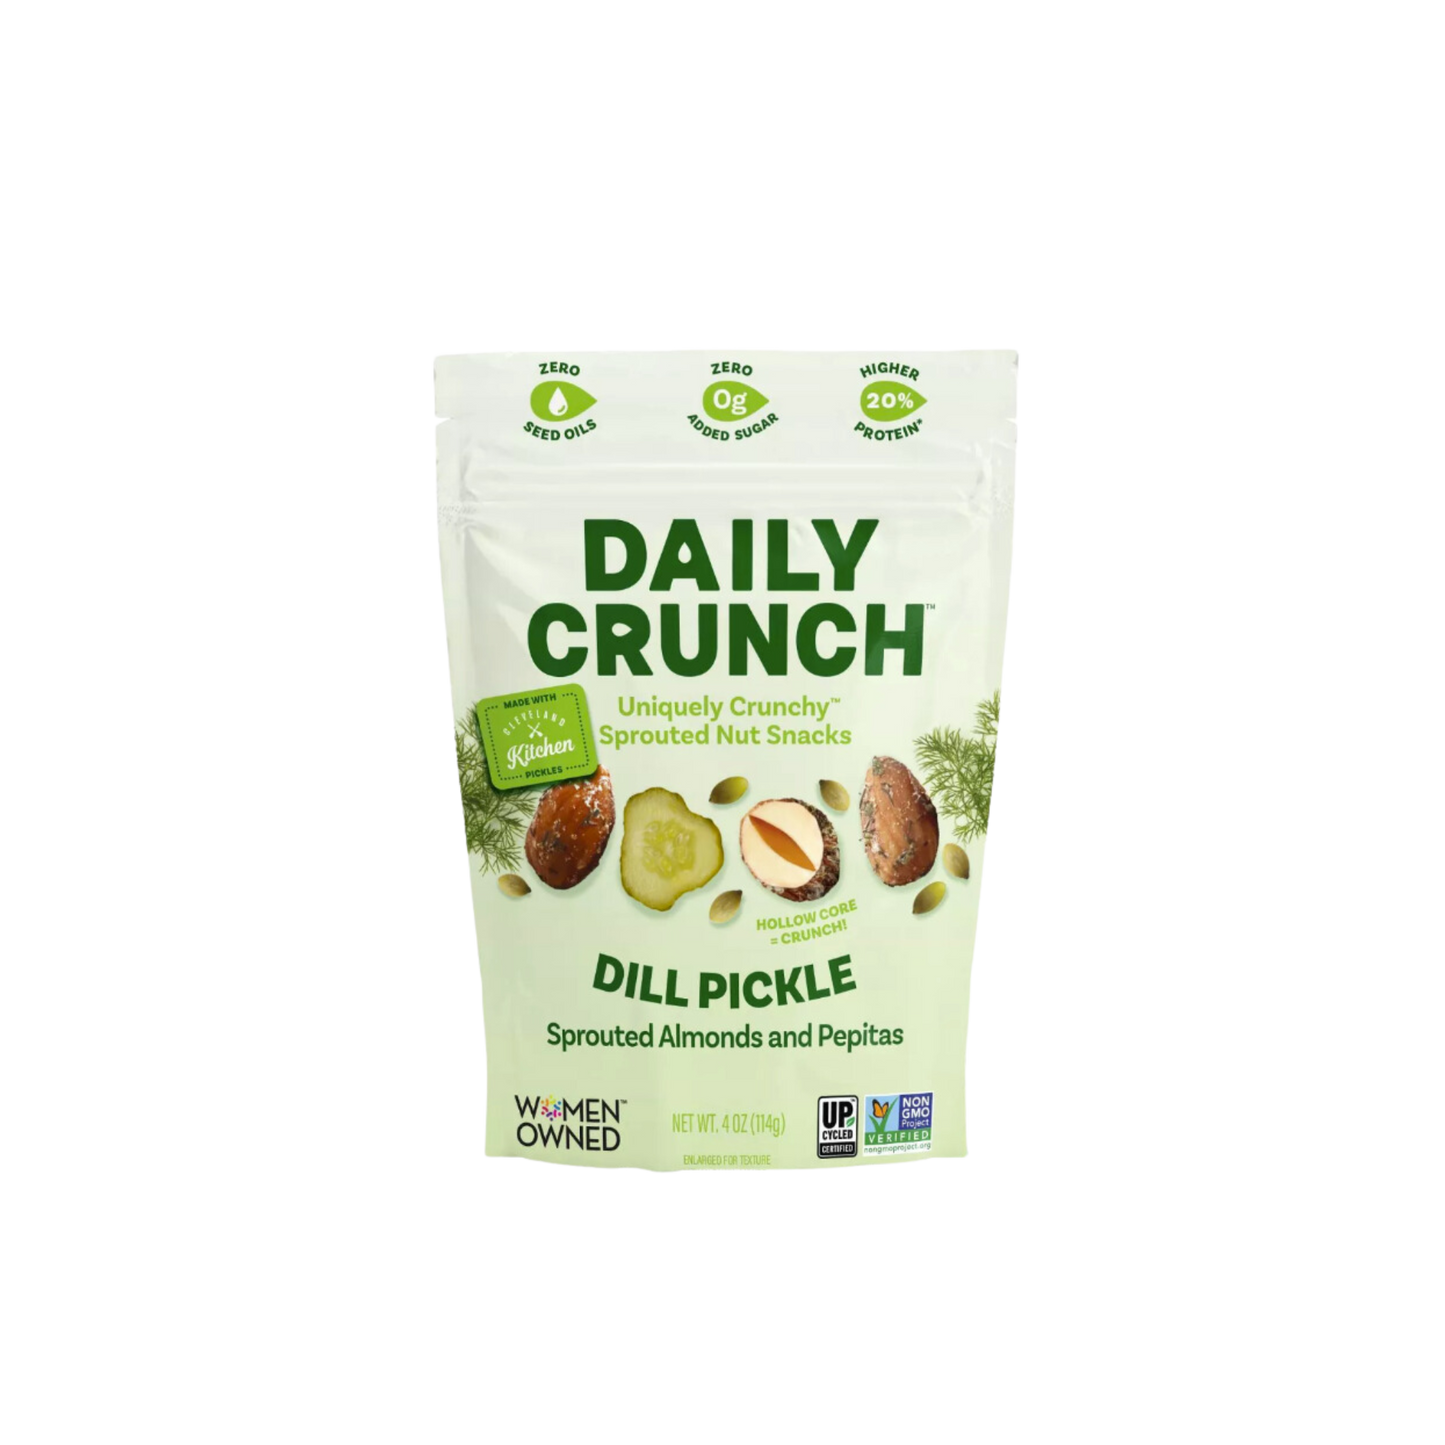 Daily Crunch Almonds